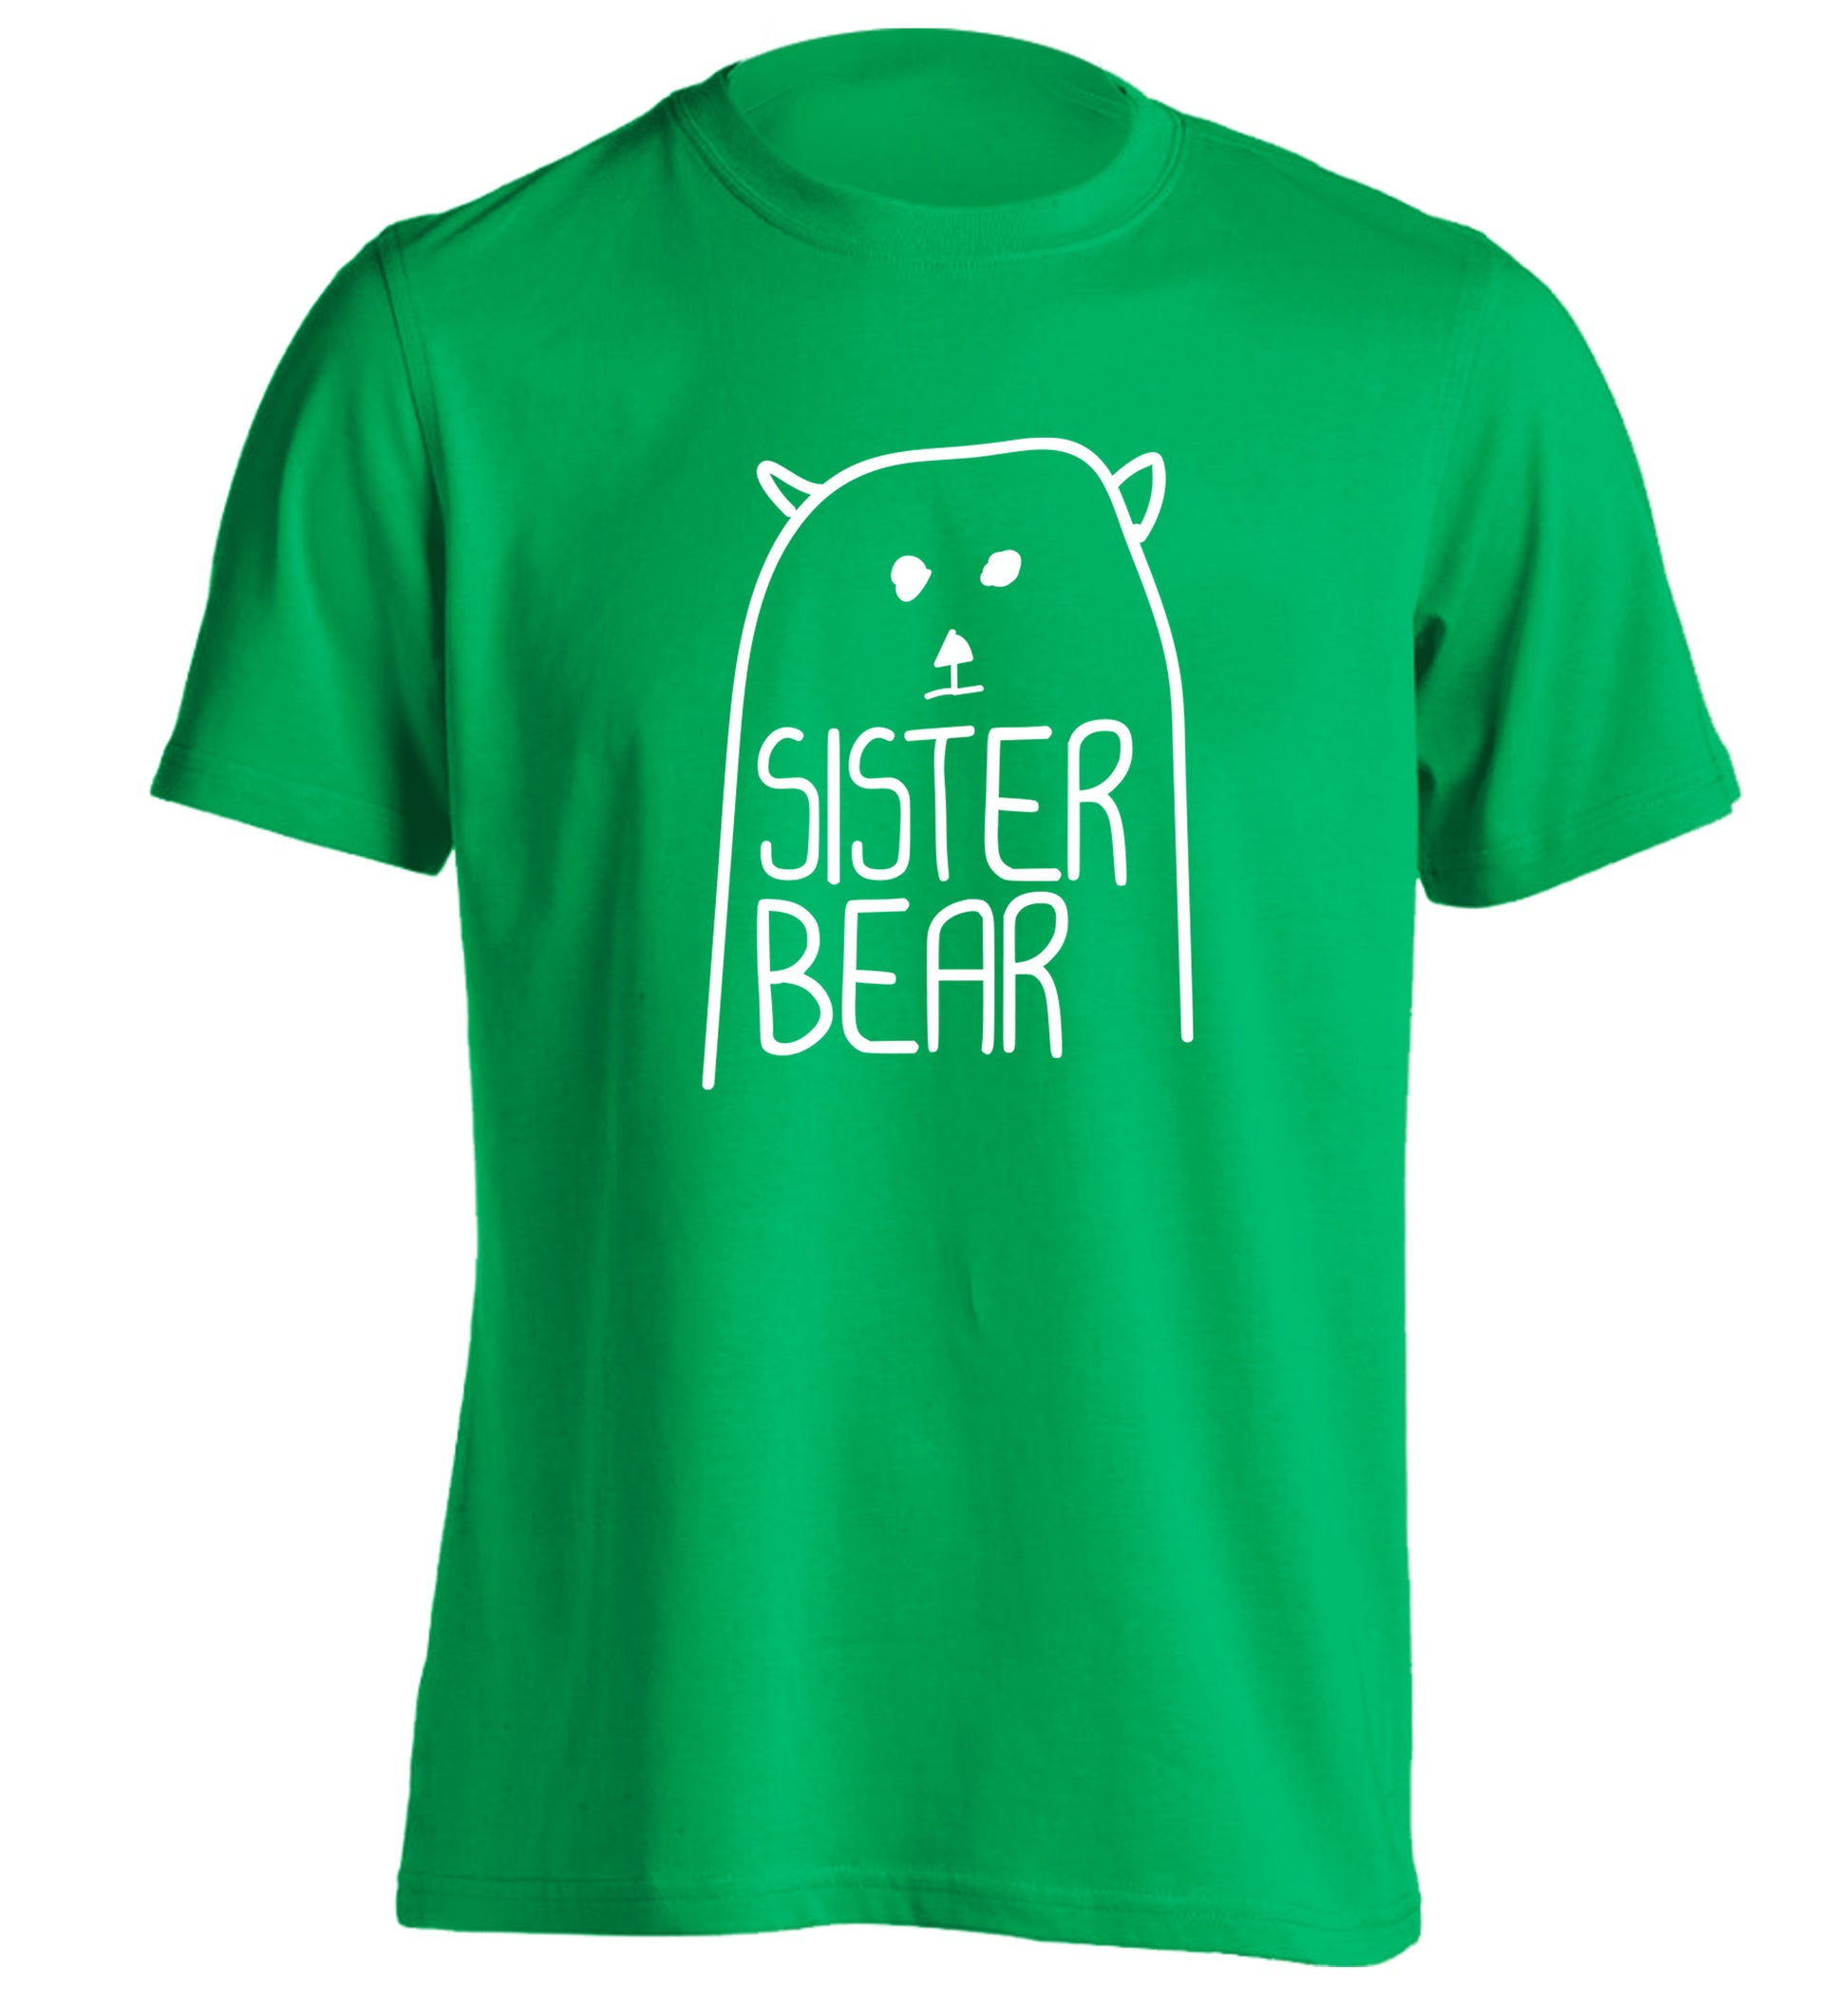 Sister bear adults unisex green Tshirt 2XL